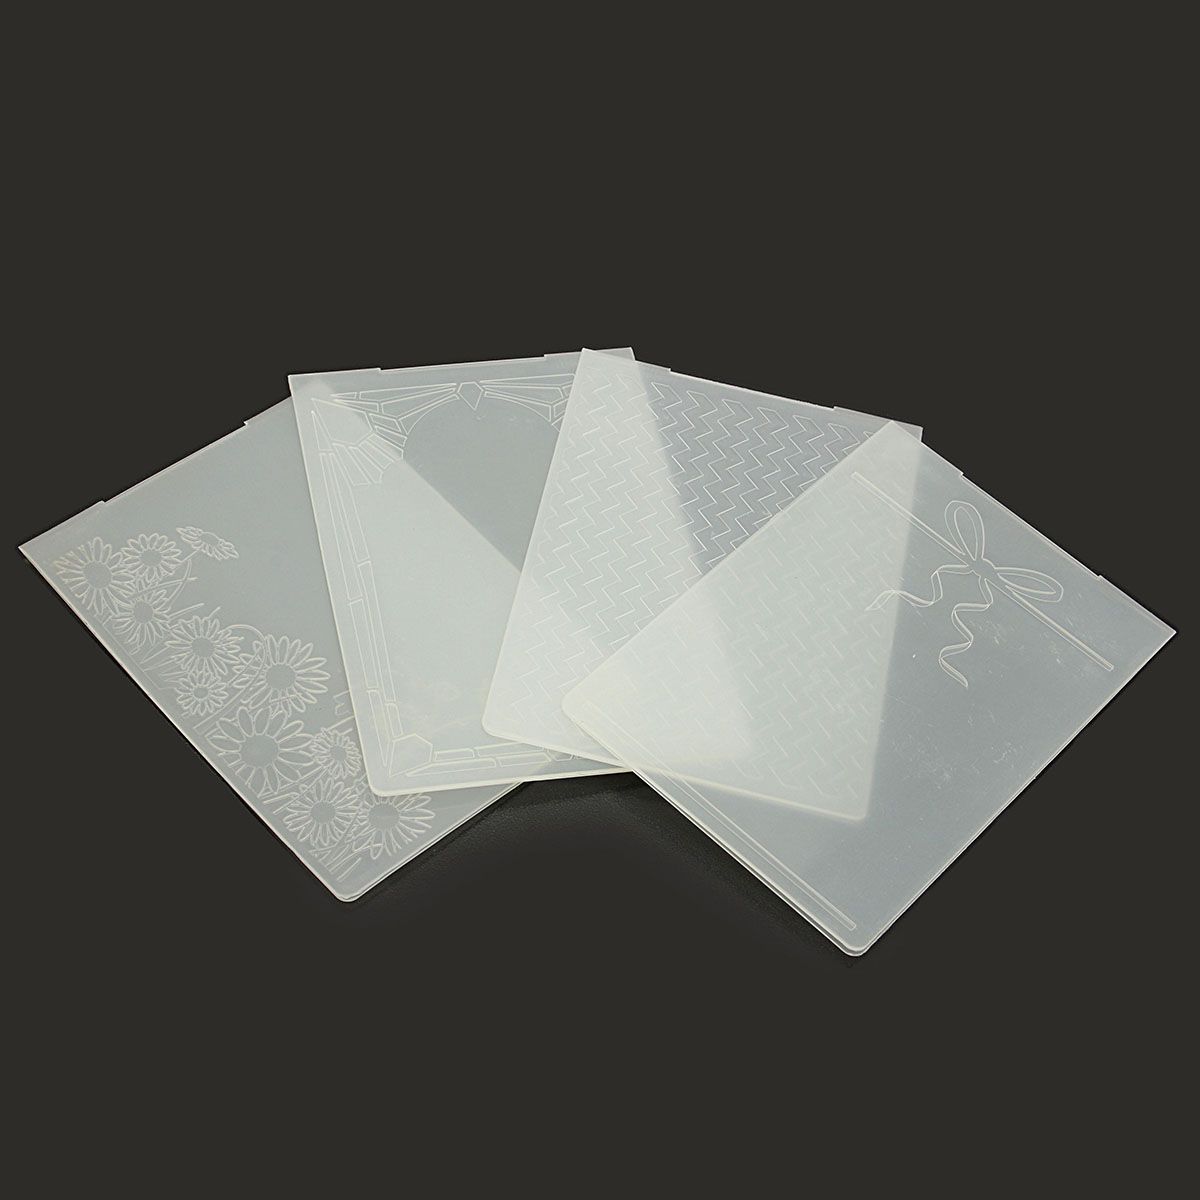 Plastic-Embossing-Folder-Templates-Scrapbooking-Album-Card-Cutting-Dies-Crafts-1132310